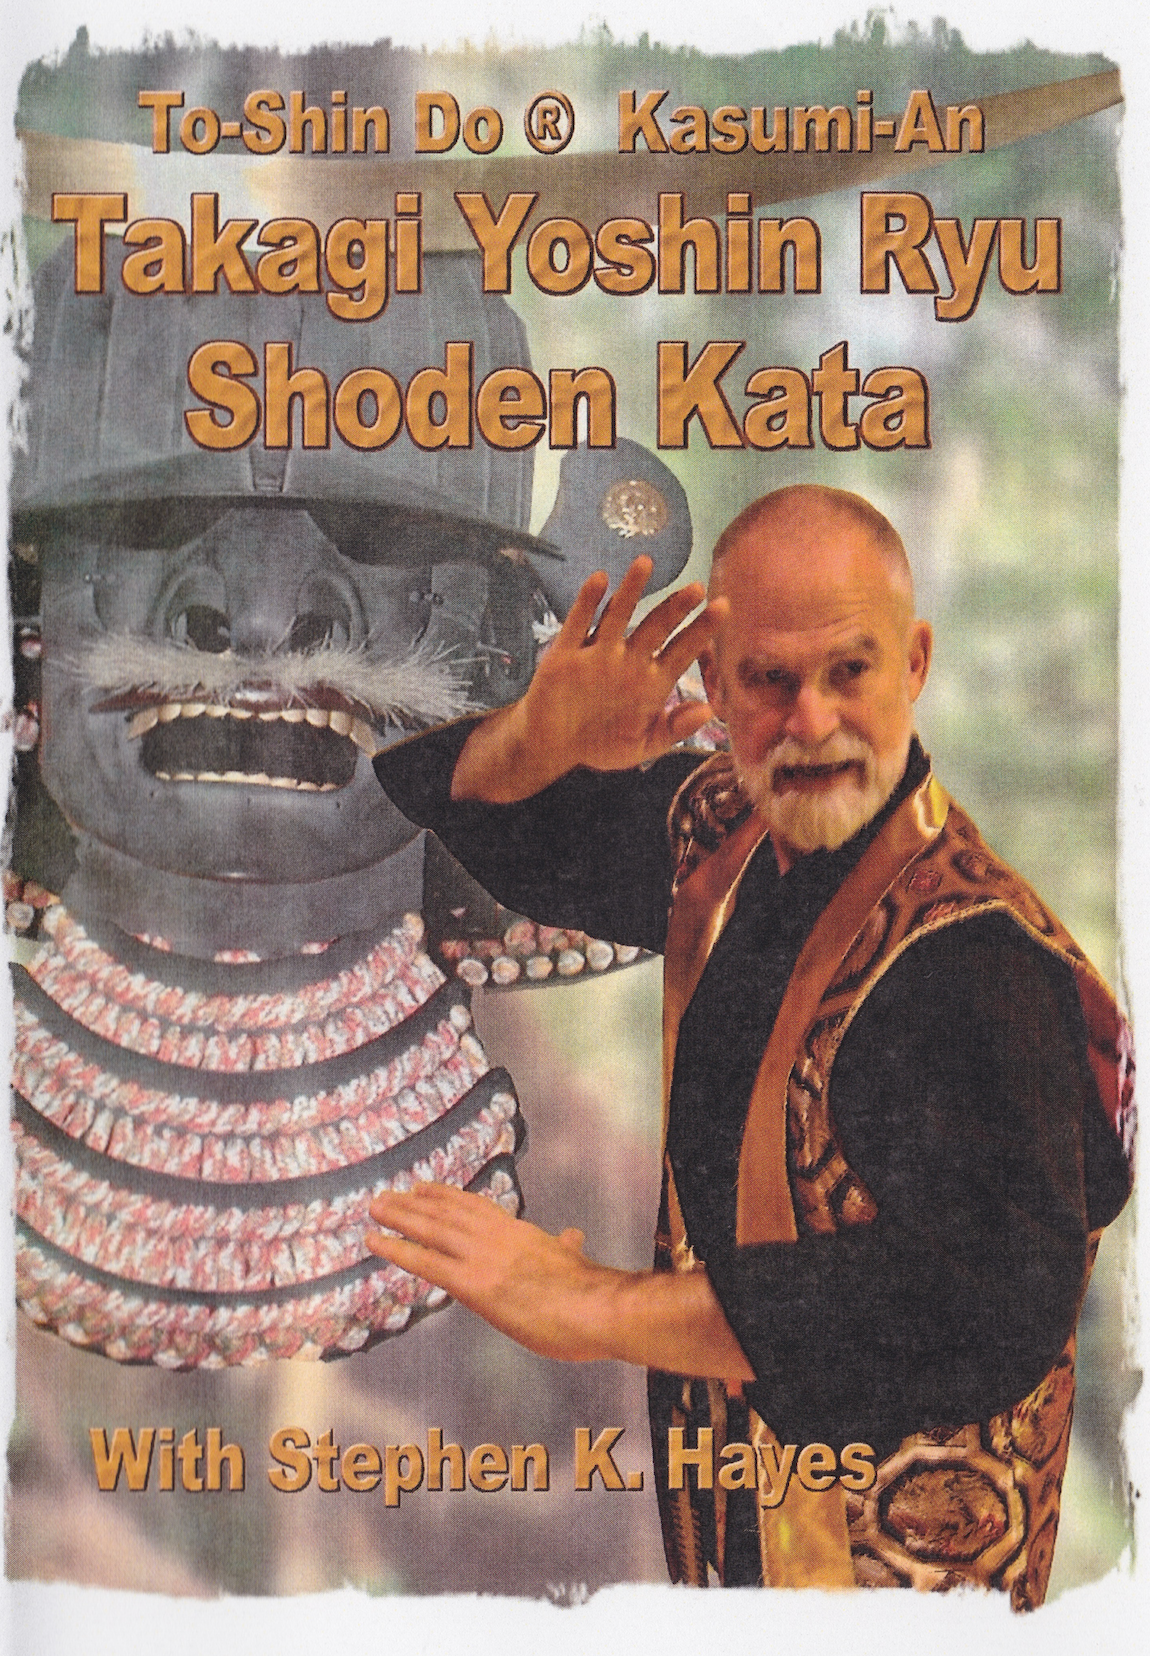 Takagi Yoshin Ryu Shoden Kata 6 DVD Set with Stephen Hayes